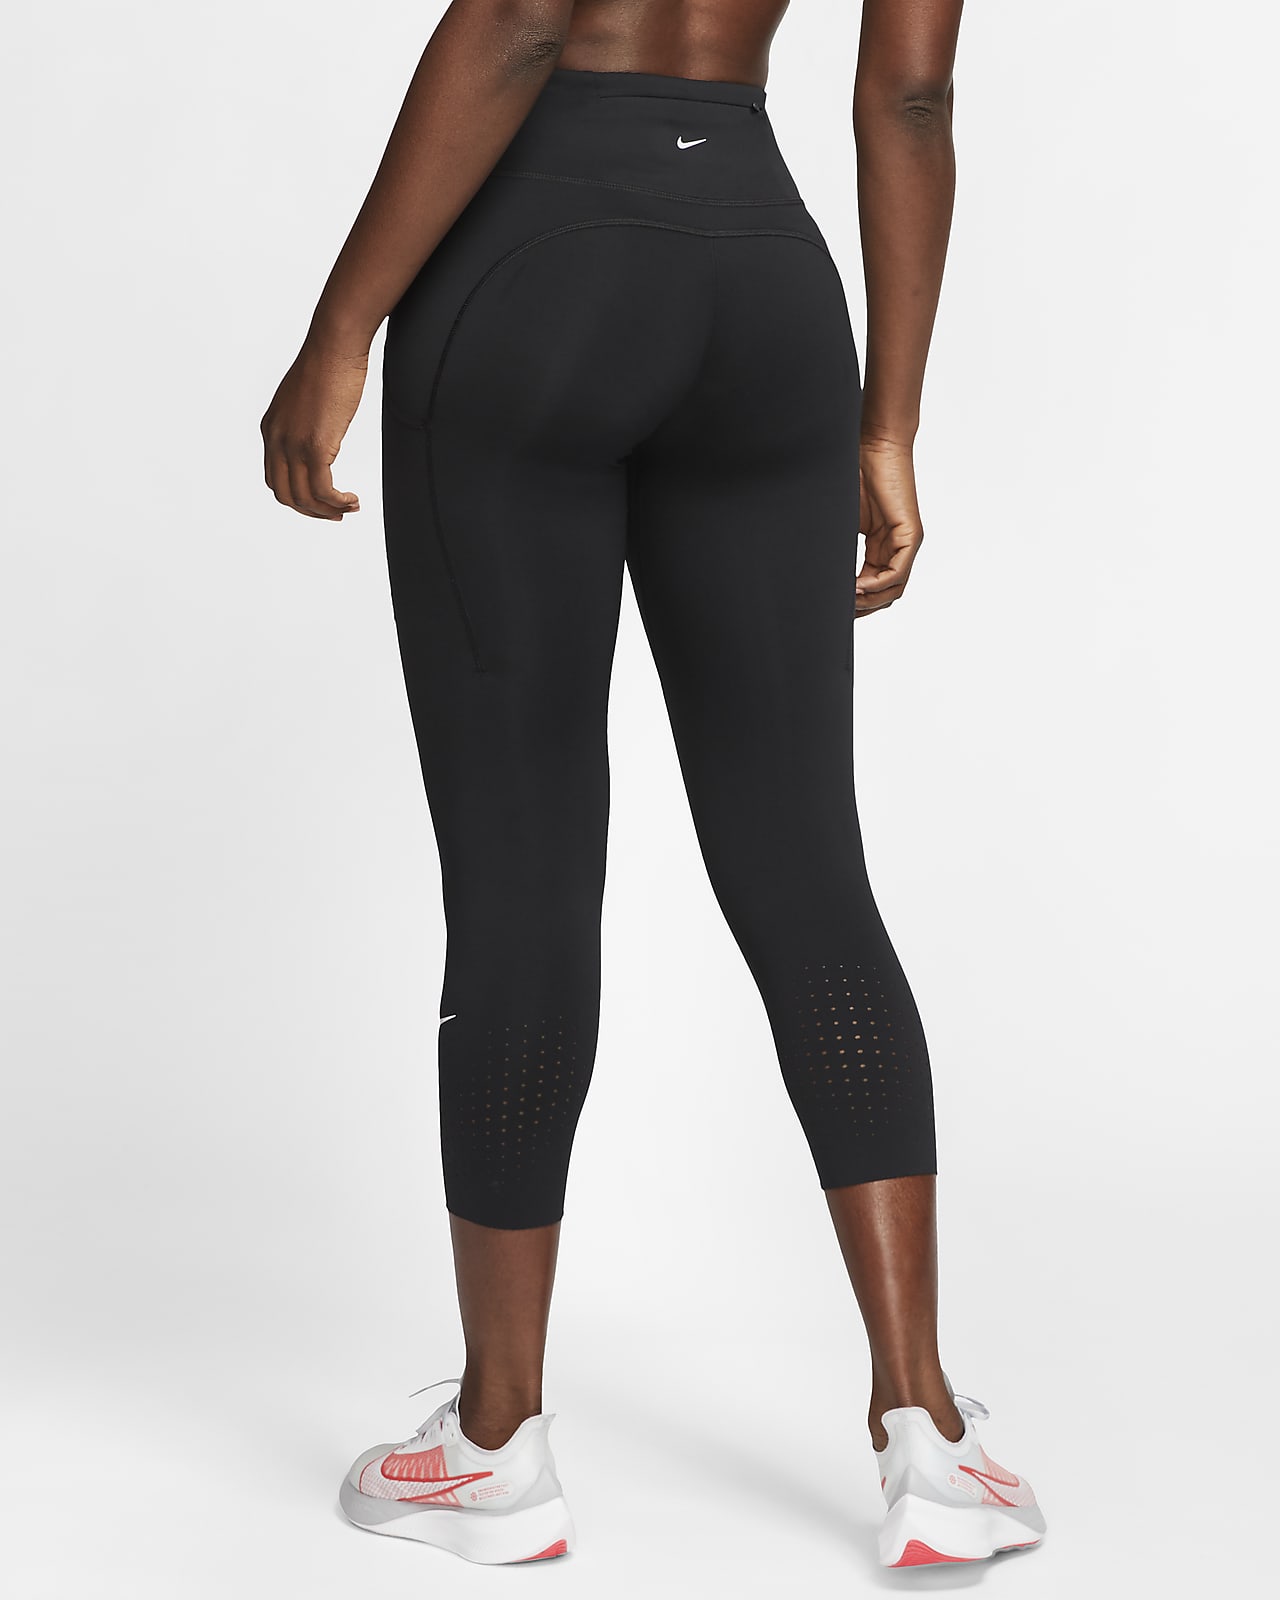 Nike Luxe Mid-Rise Crop Pocket Running Leggings. AU